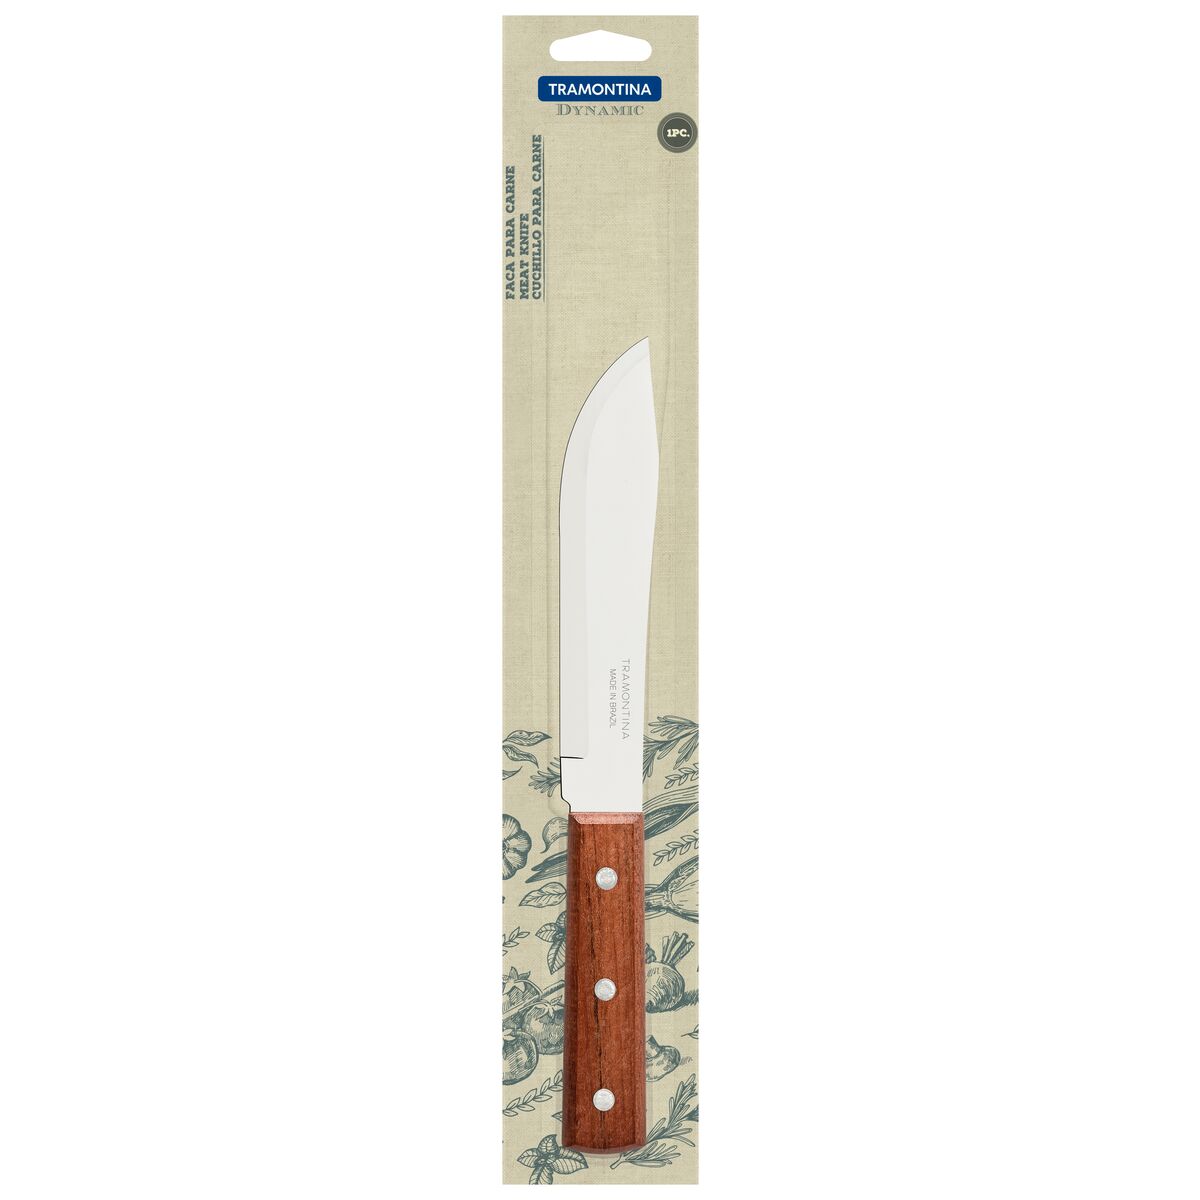 Tramontina Butcher Knife 6" Dynamic - 22901/106